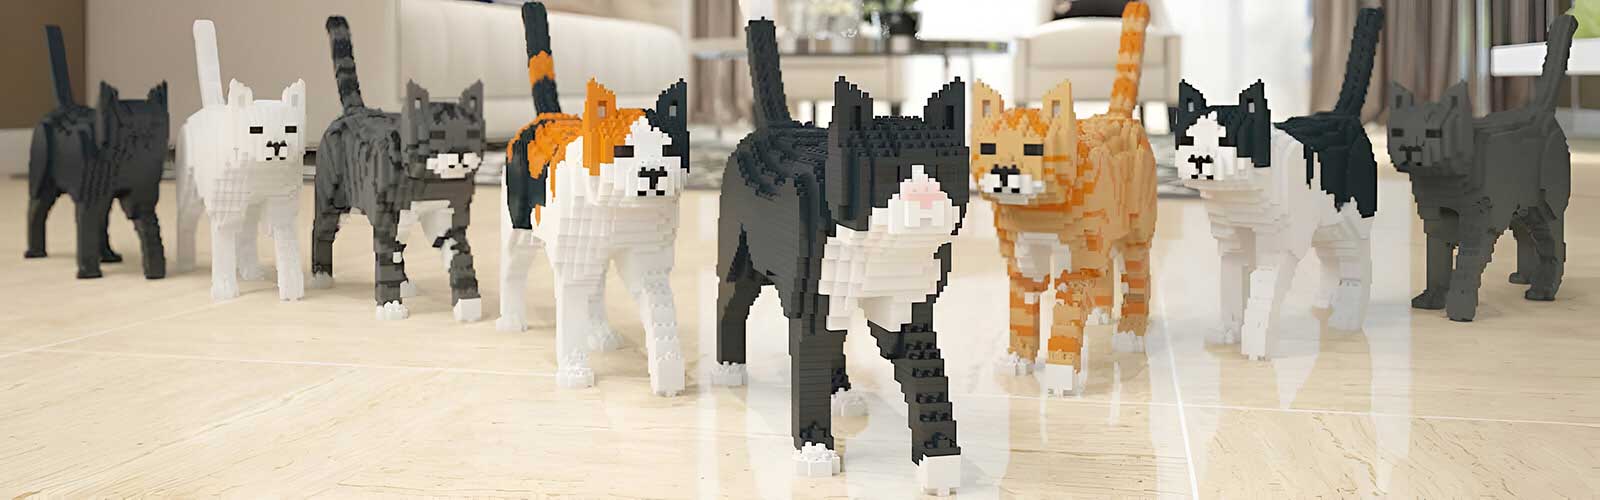 Lego style Cat building sets. DIY Pixel Cat Model Kits